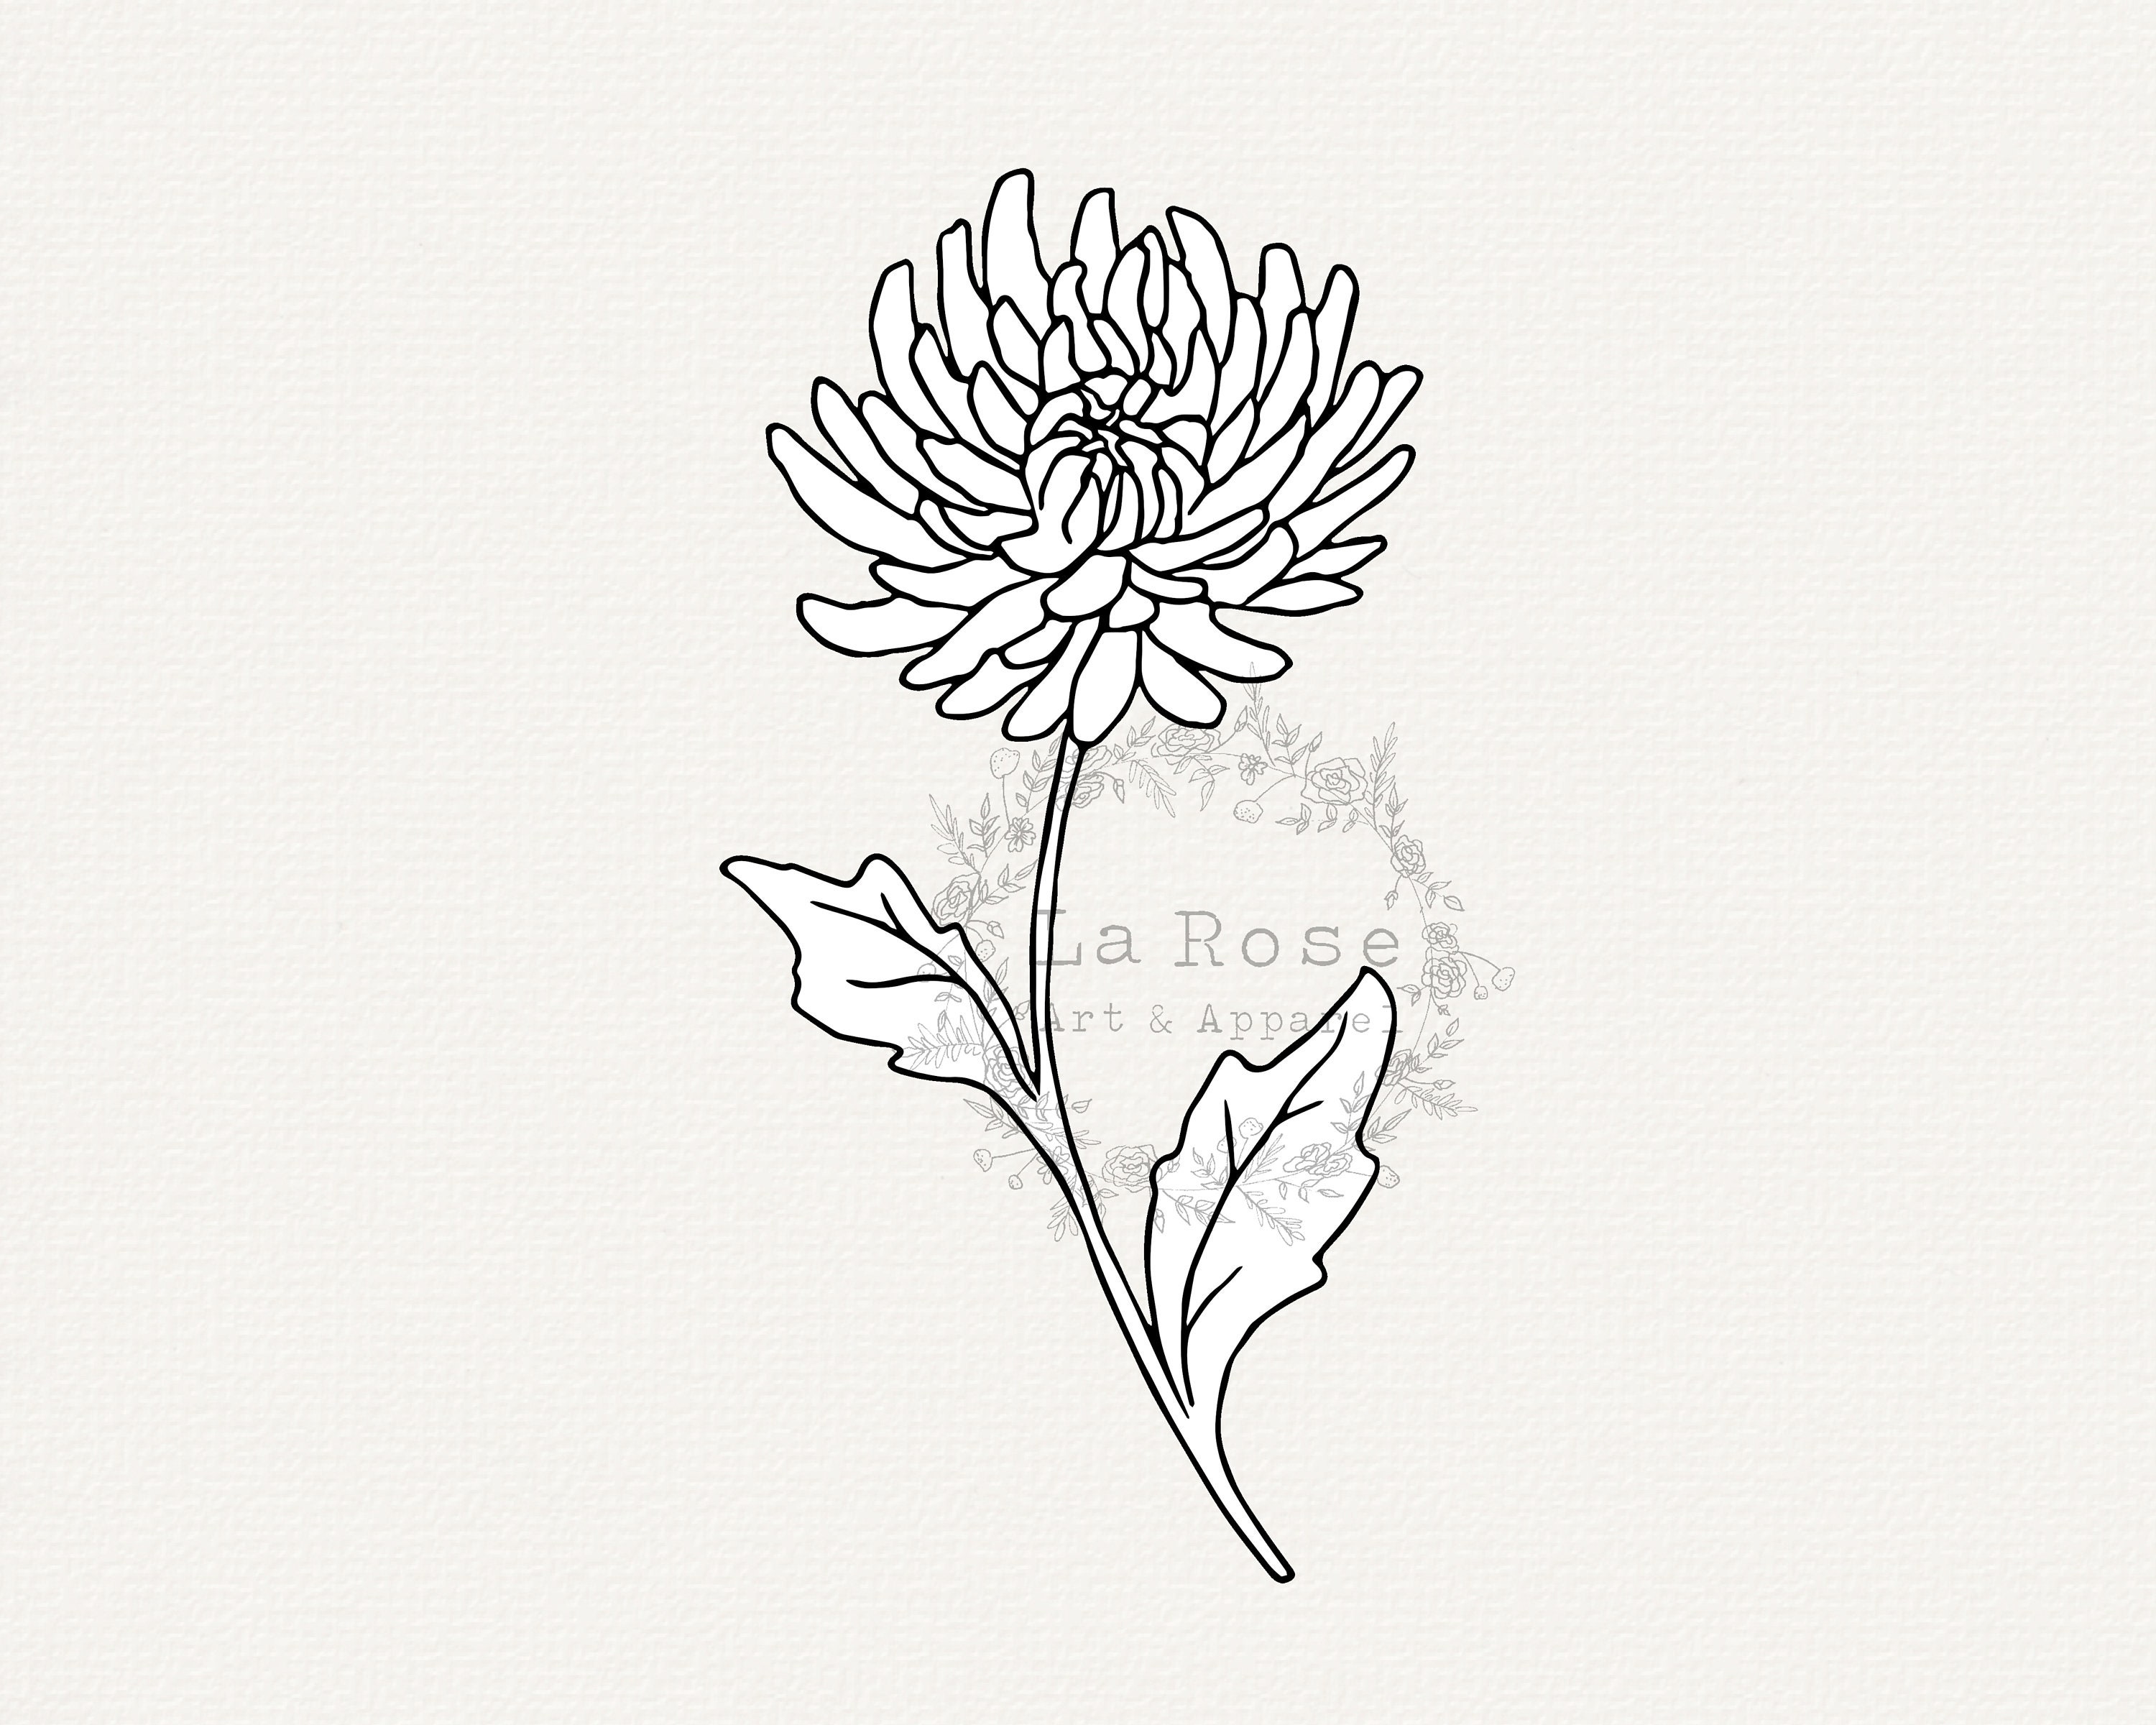 Chrysanthemum SVG, Chrysanthemum Flower Hand Drawn Clipart, November Birth  Month Flower, Birthday Flower, Cricut Cut File, Floral Line Art 